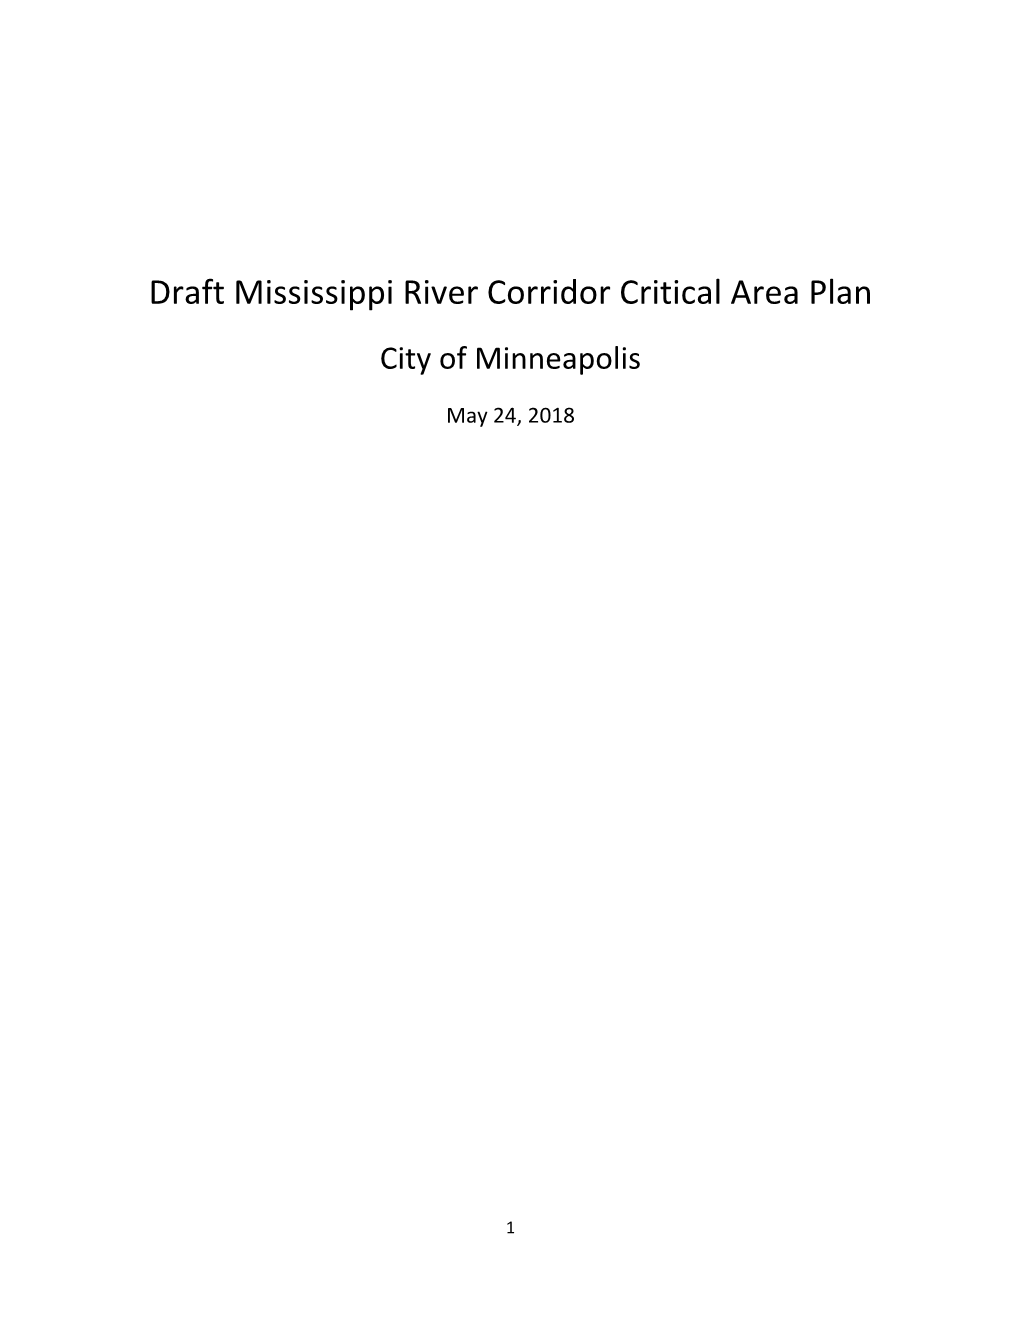 Draft Mississippi River Corridor Critical Area Plan City of Minneapolis